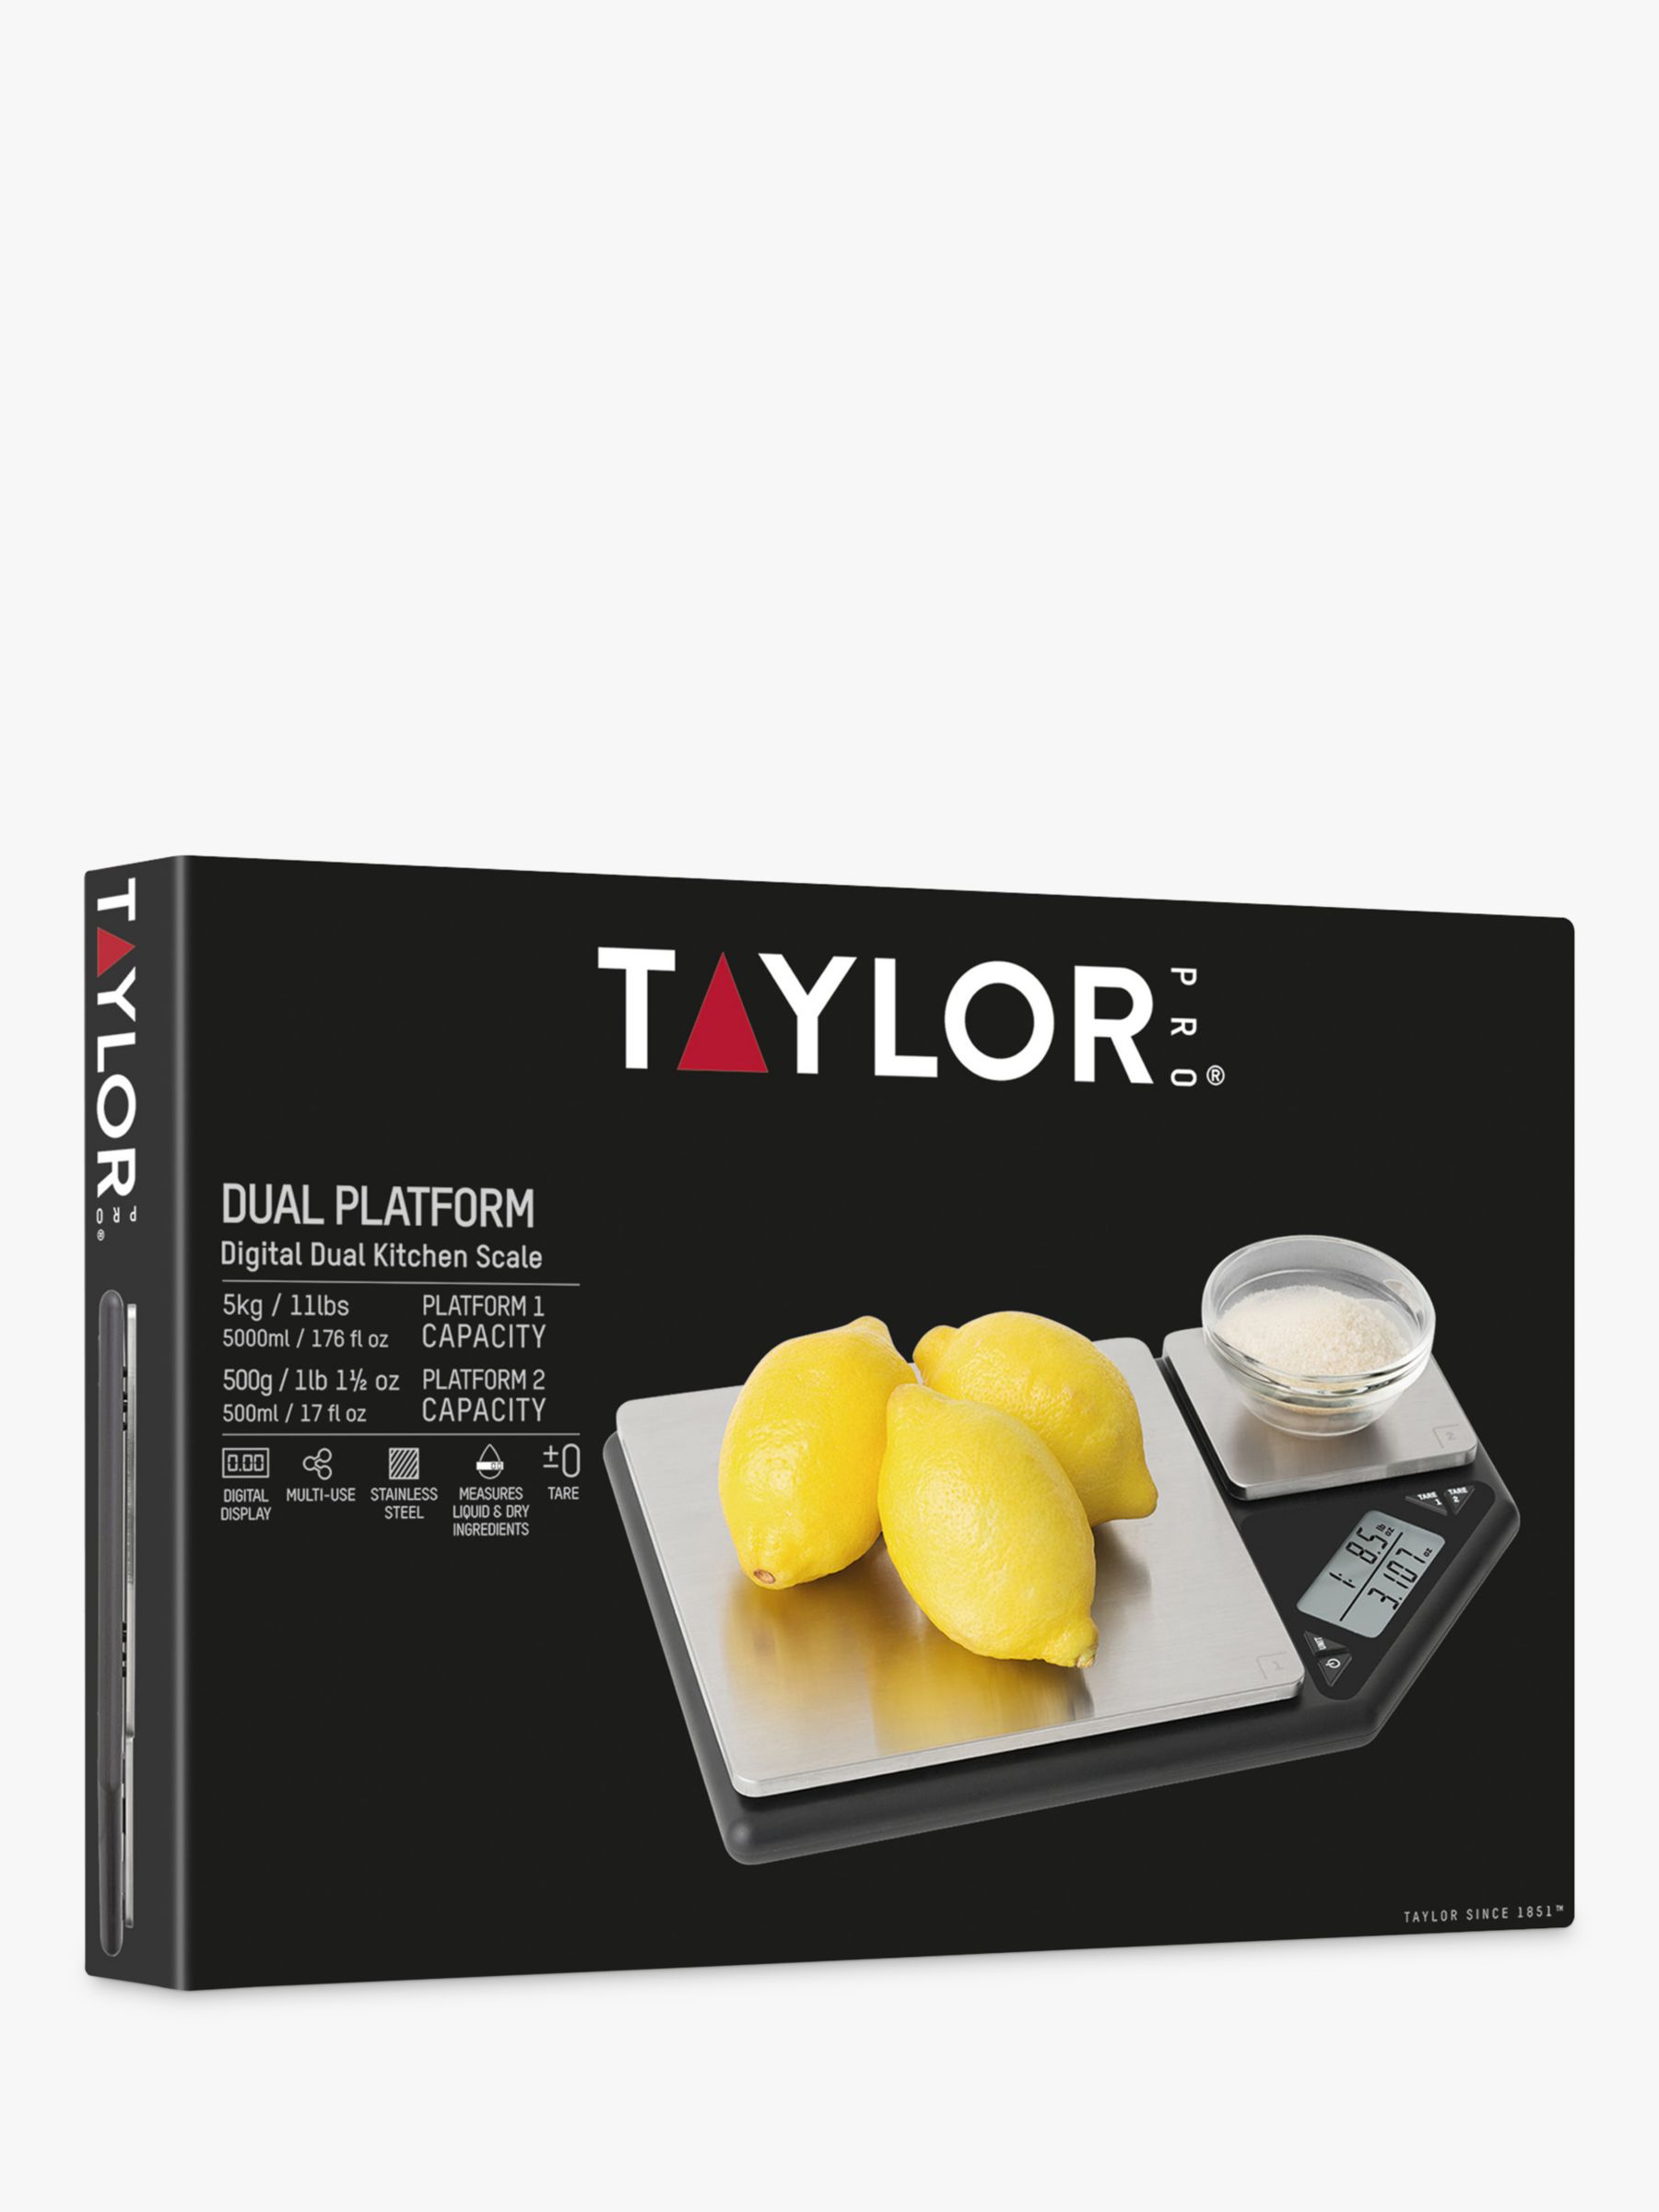 FS591 - TYPSCALE5DP - Taylor Pro Dual Platform Digital Kitchen Scale  5kg/500g - FS591